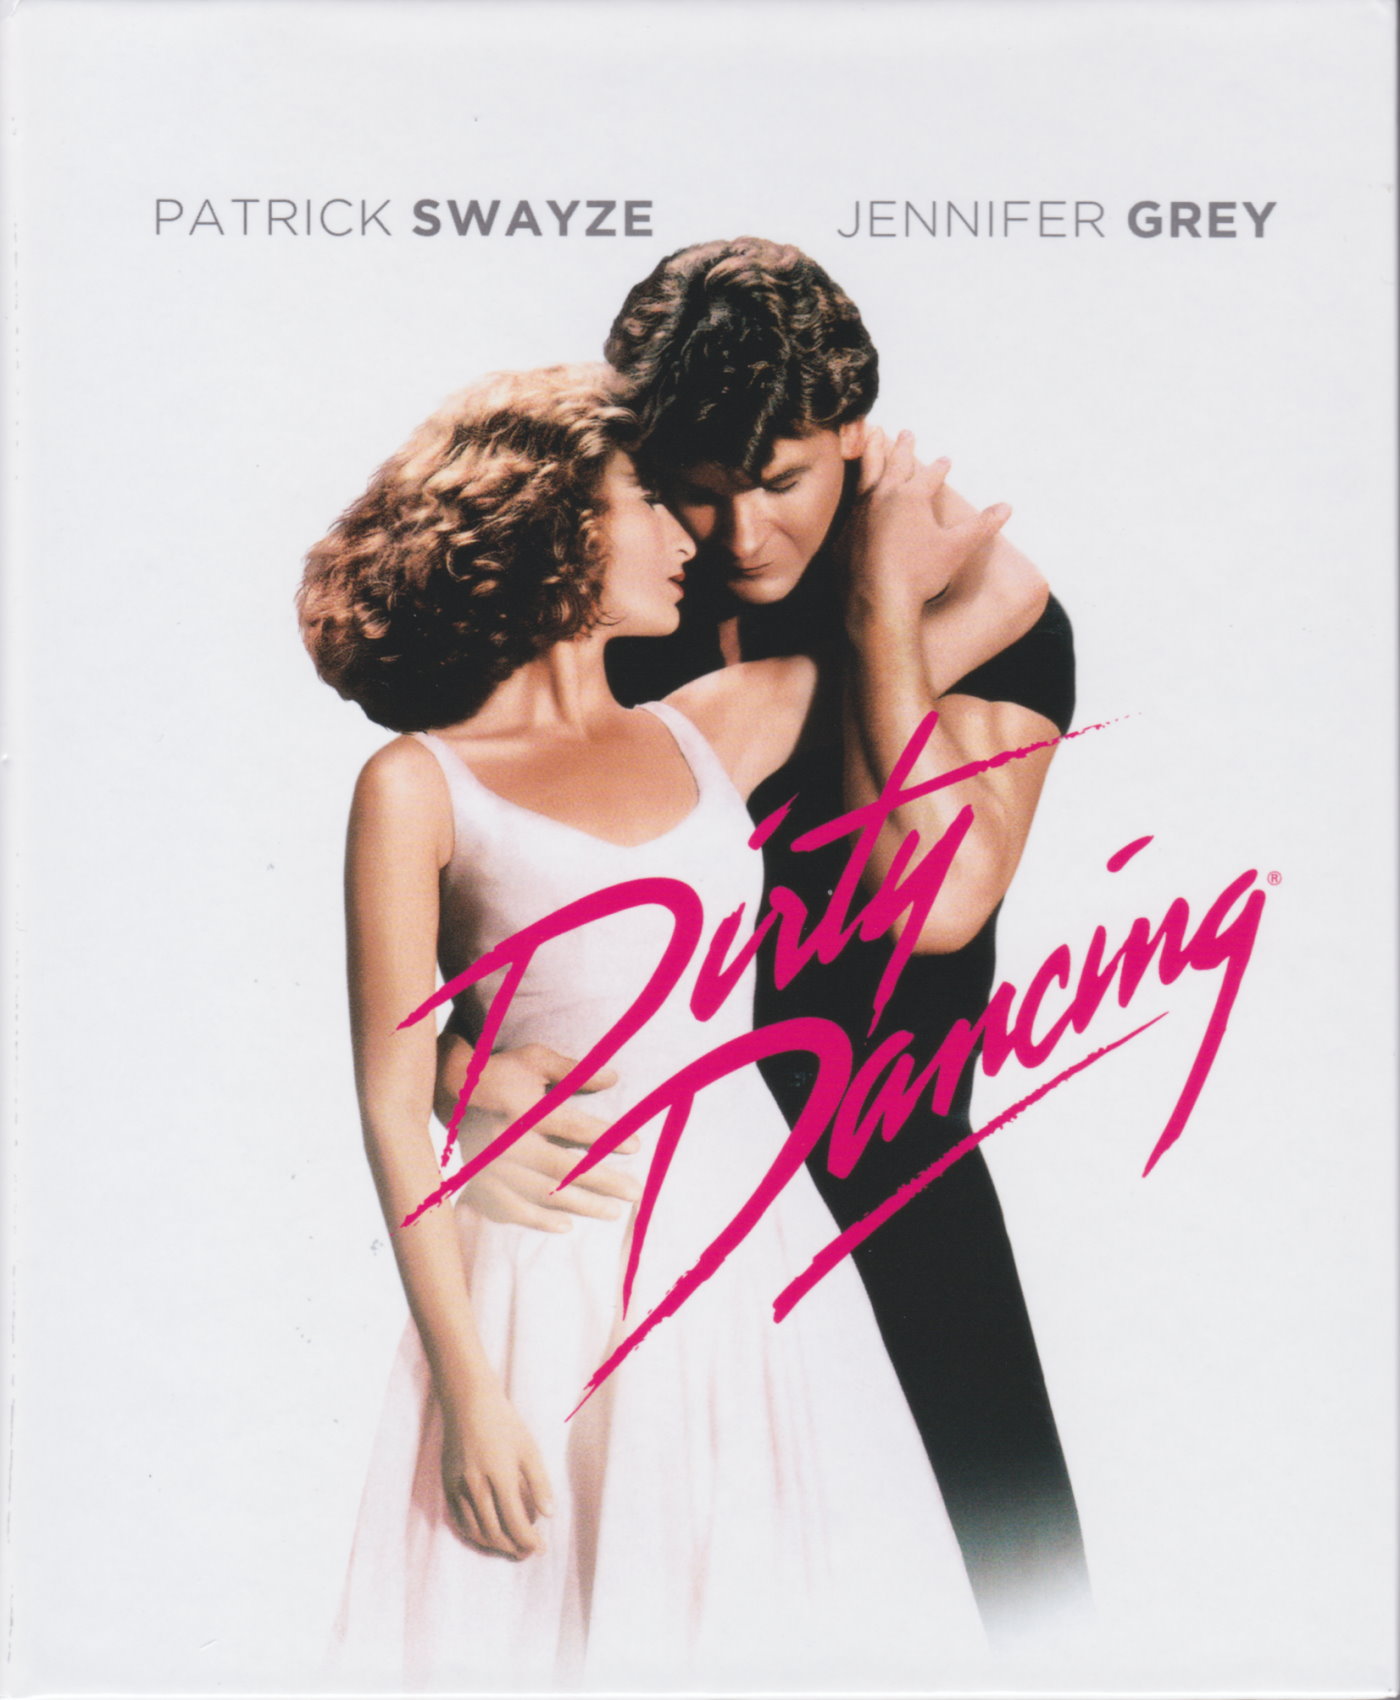 Cover - Dirty Dancing.jpg